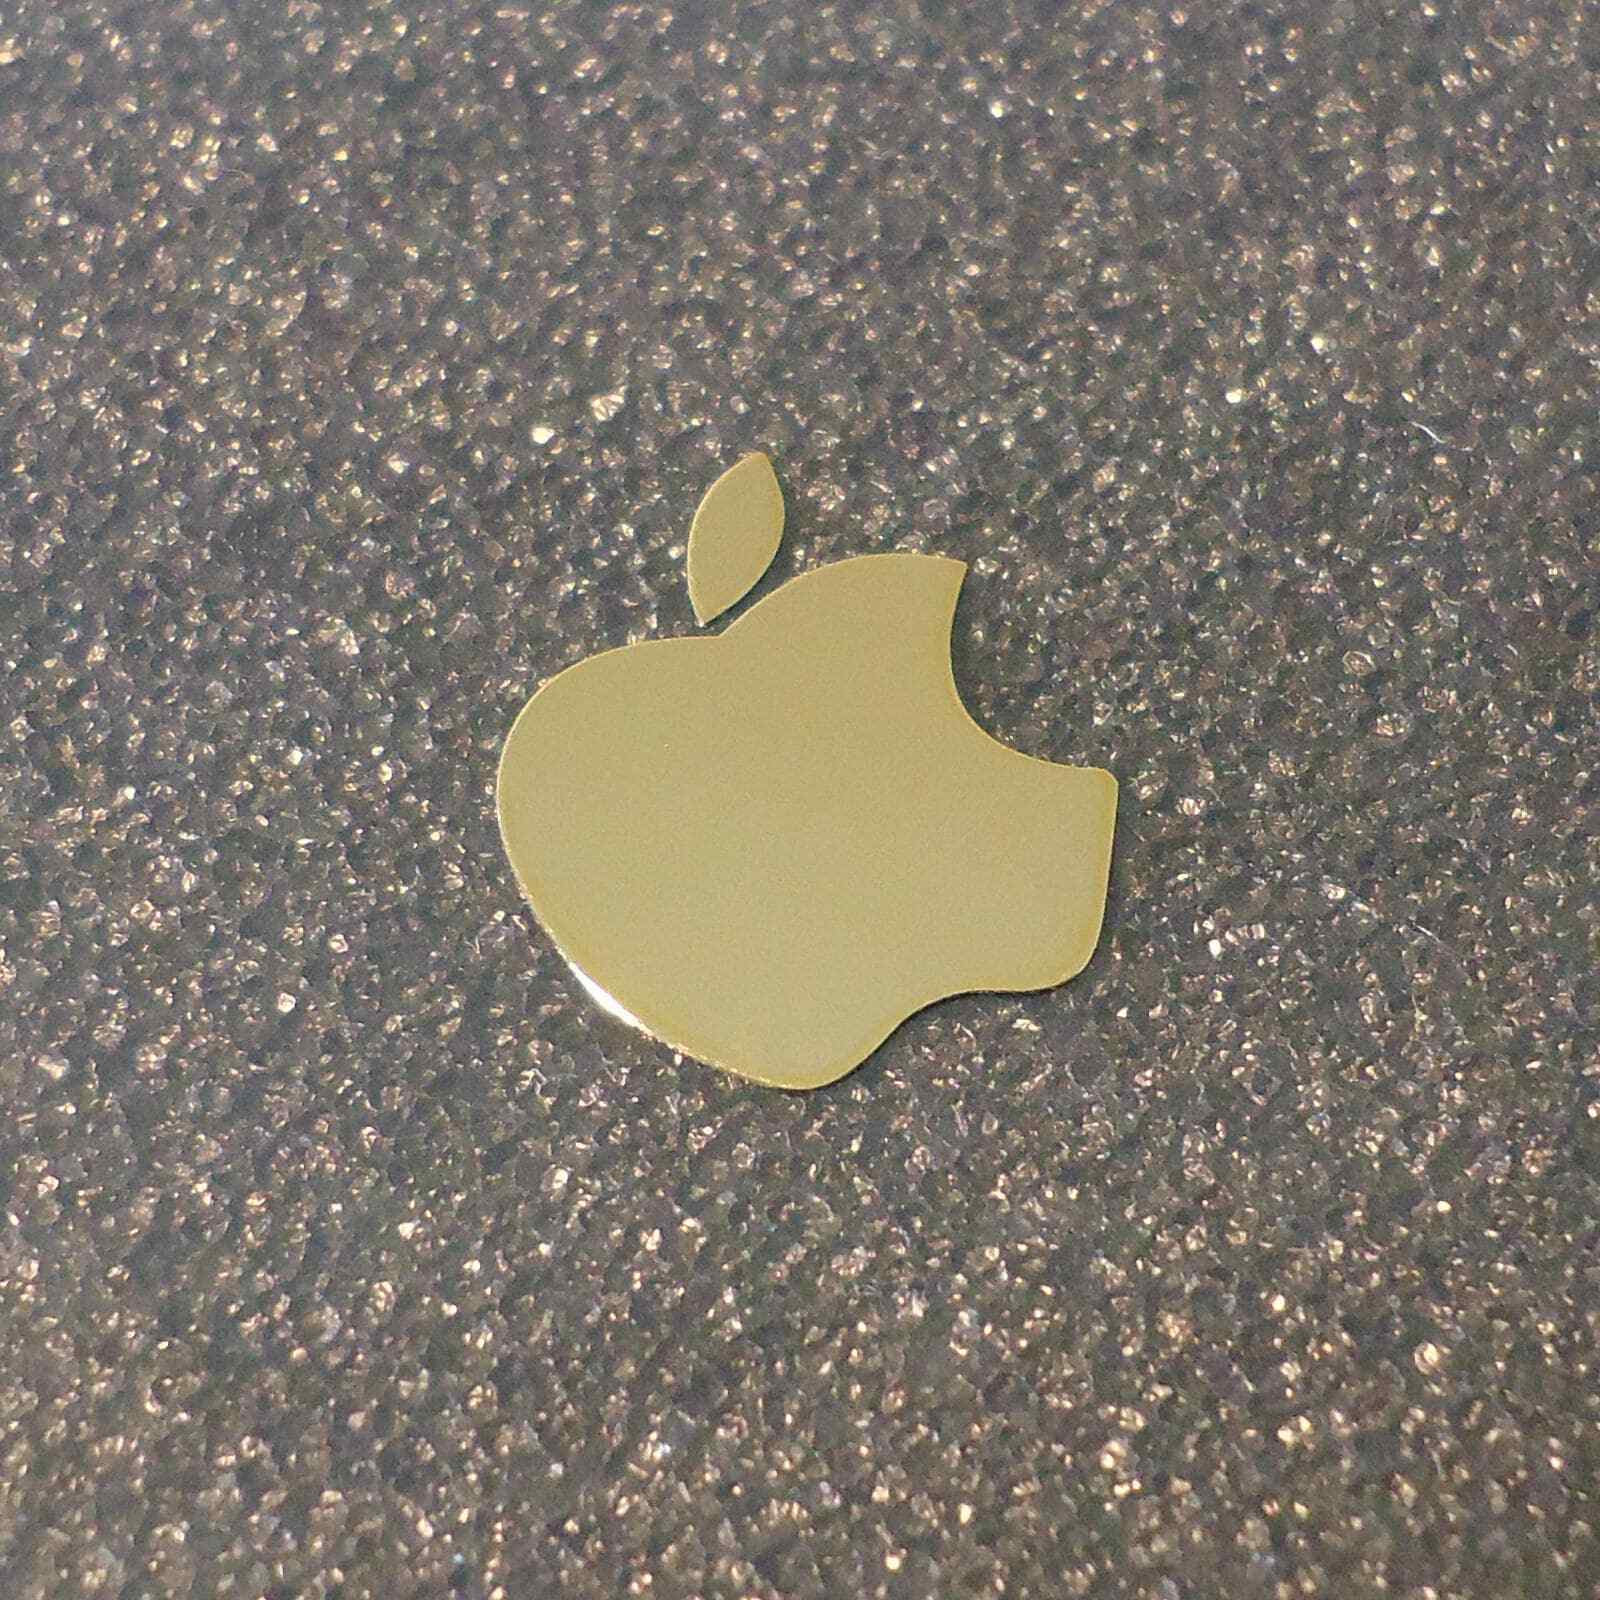 Gold Apple Label / Aufkleber / Sticker / Badge / Logo 13mm x 15mm [007g]